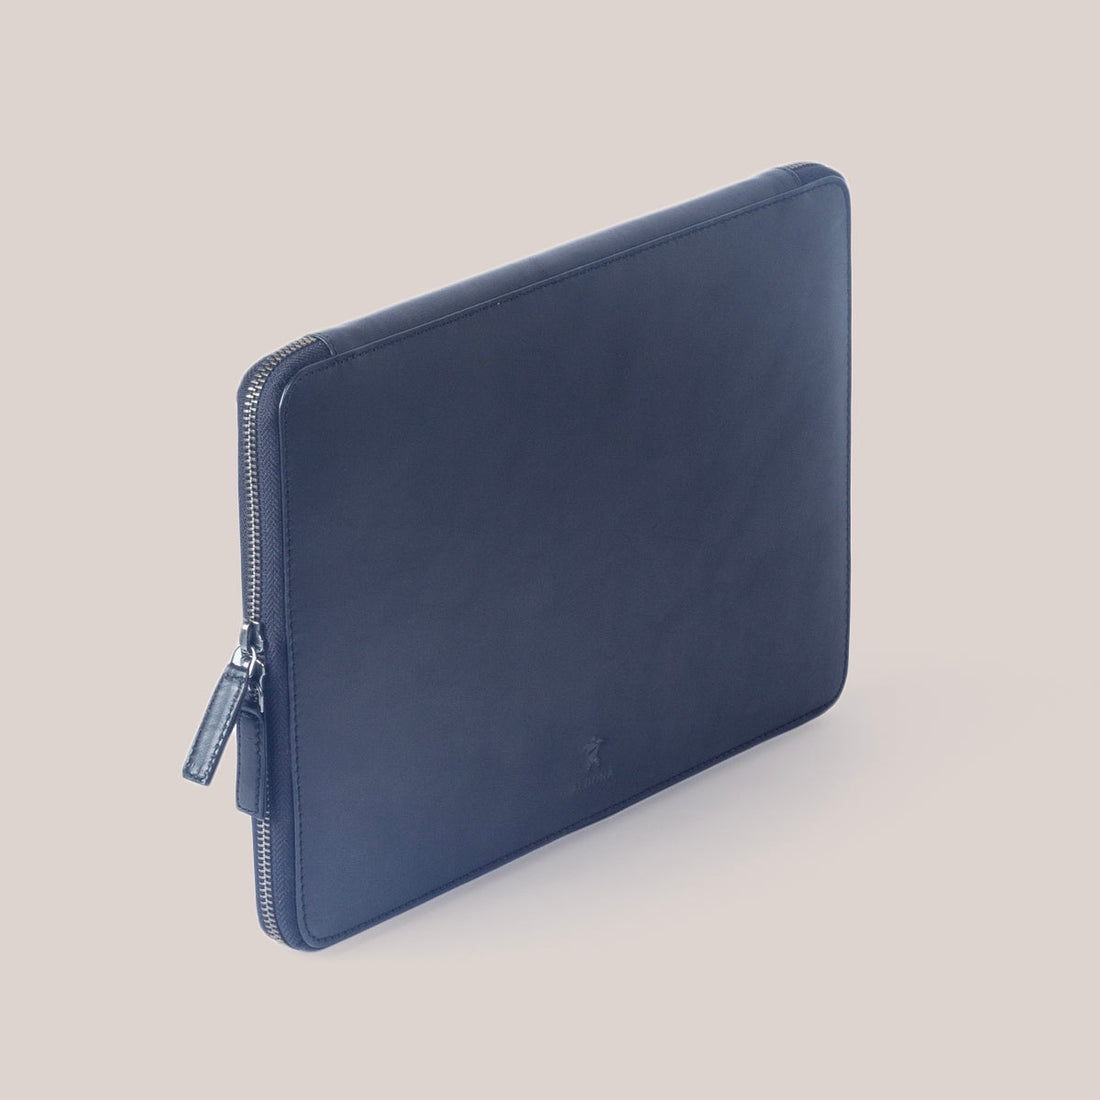 MacBook Pro 13 Zippered Laptop Case - Cognac